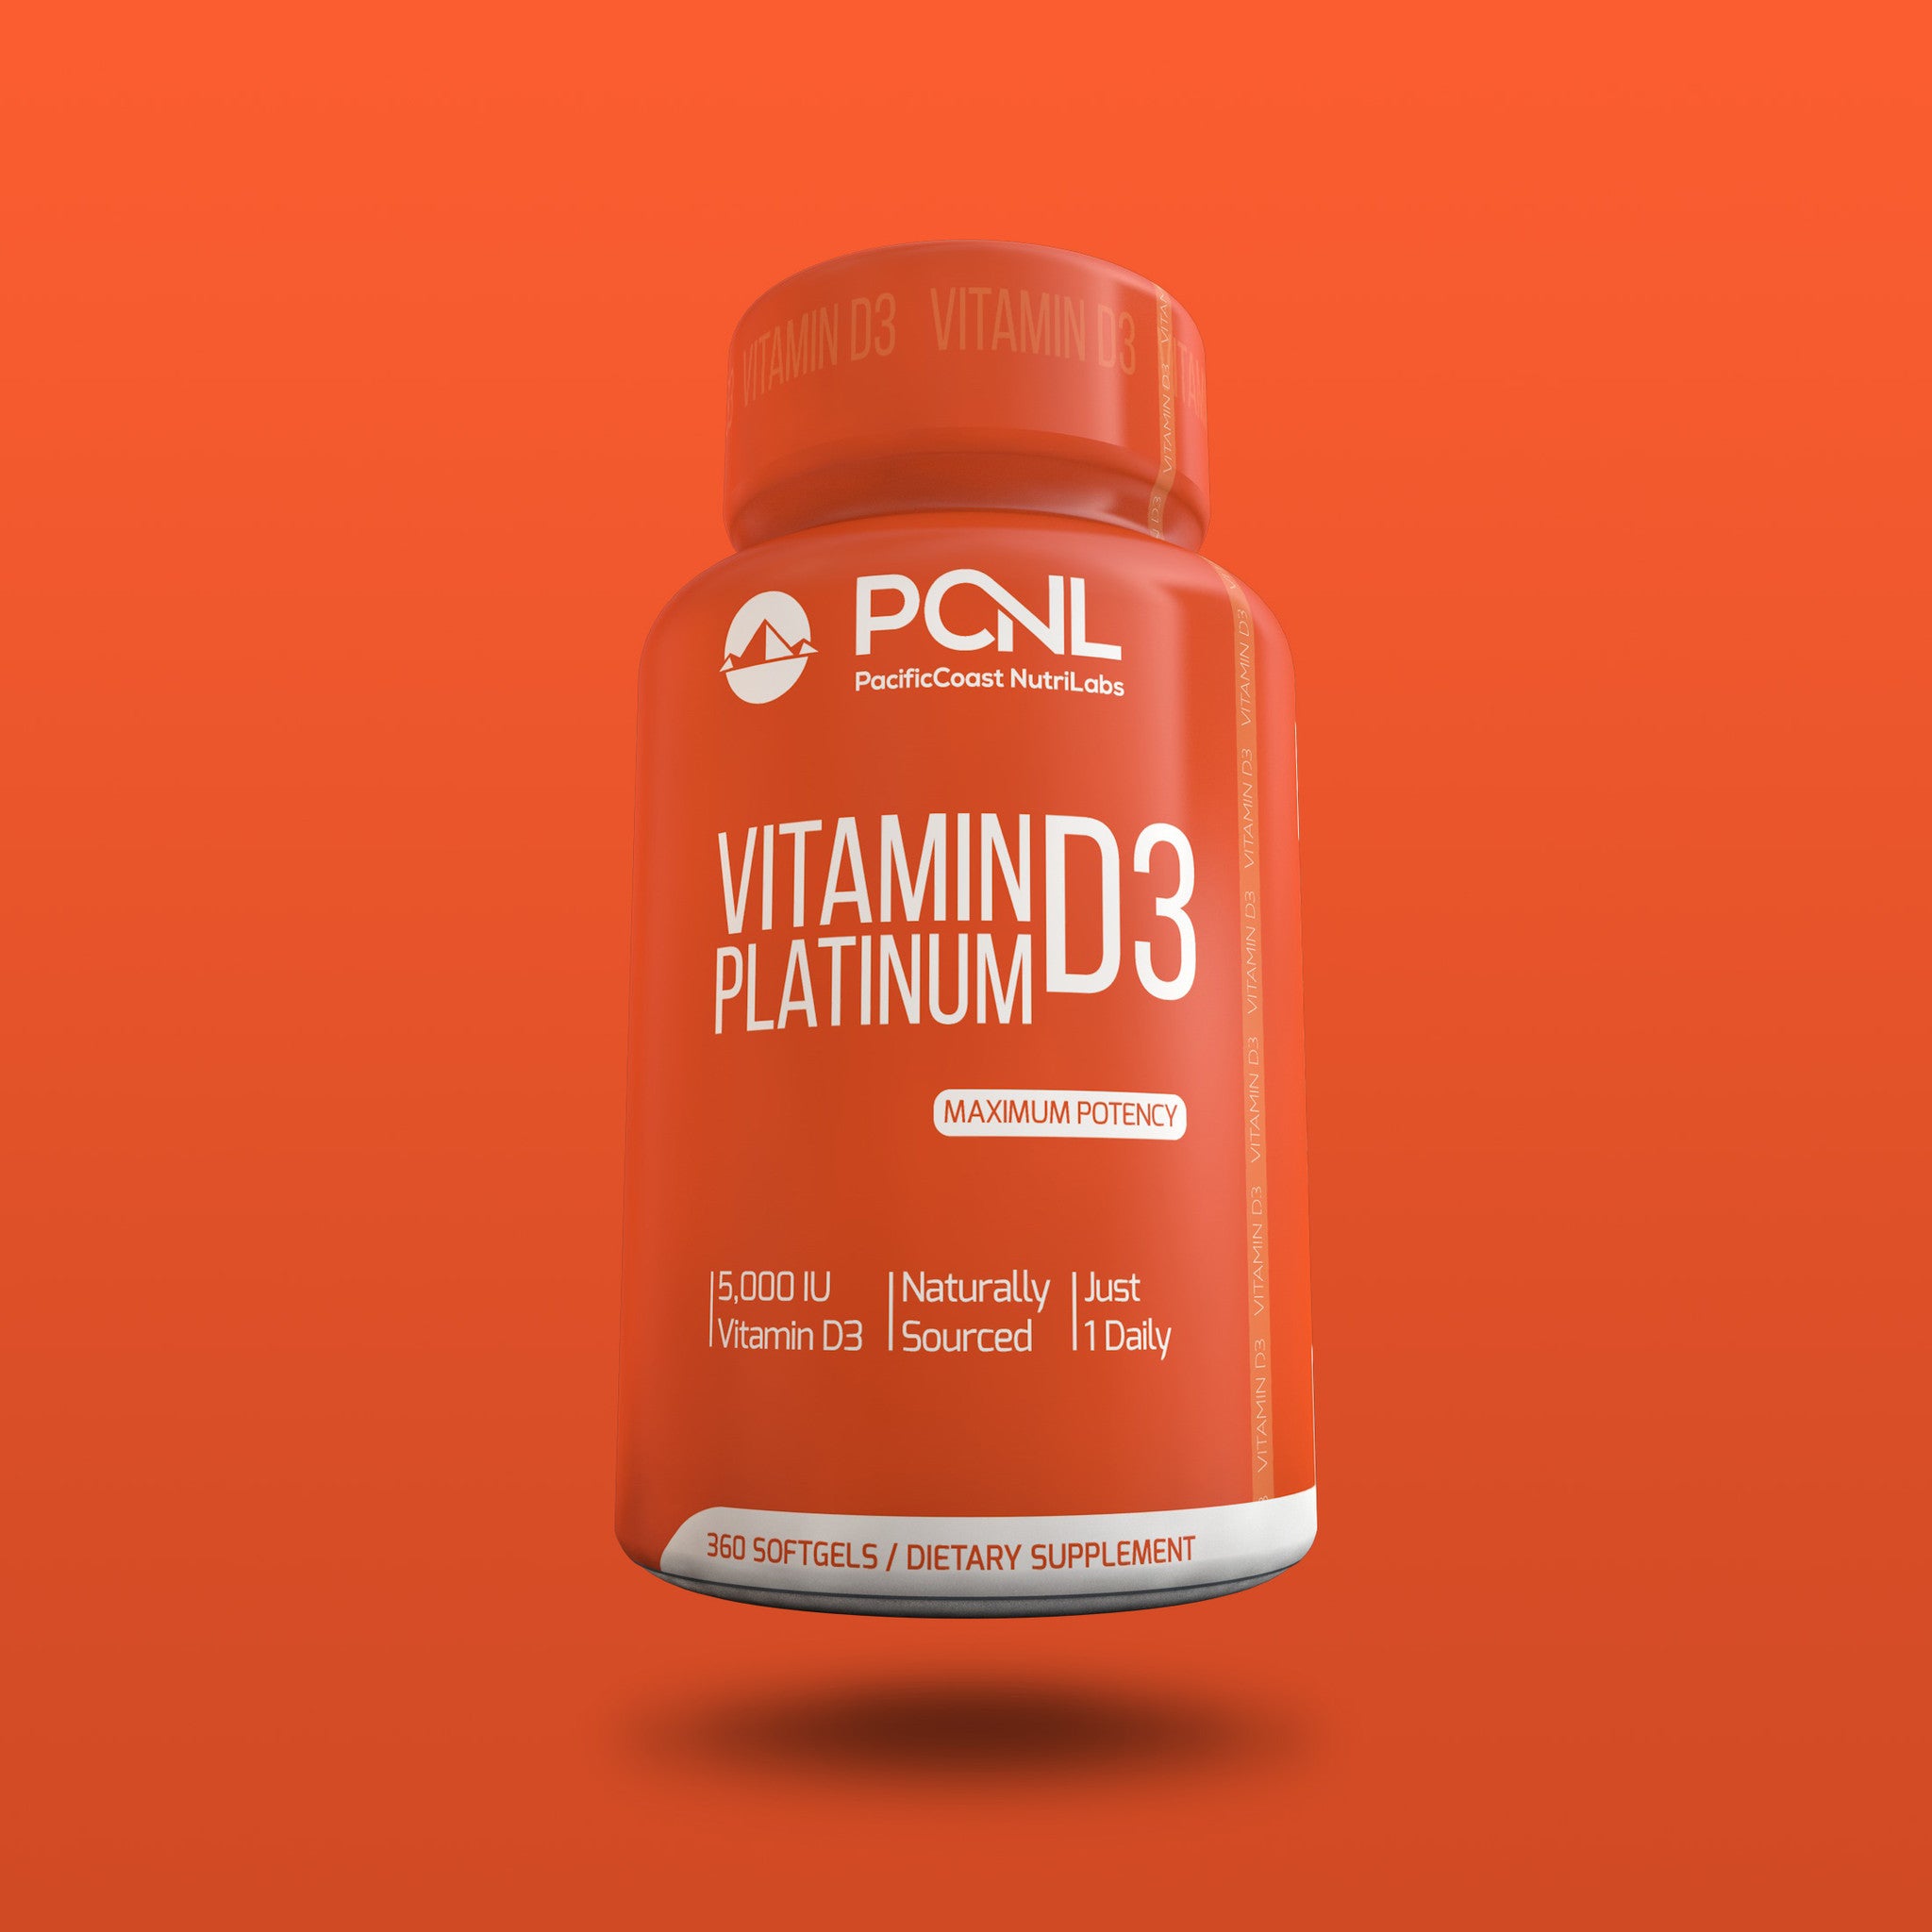 5,000 IU Vitamin D3